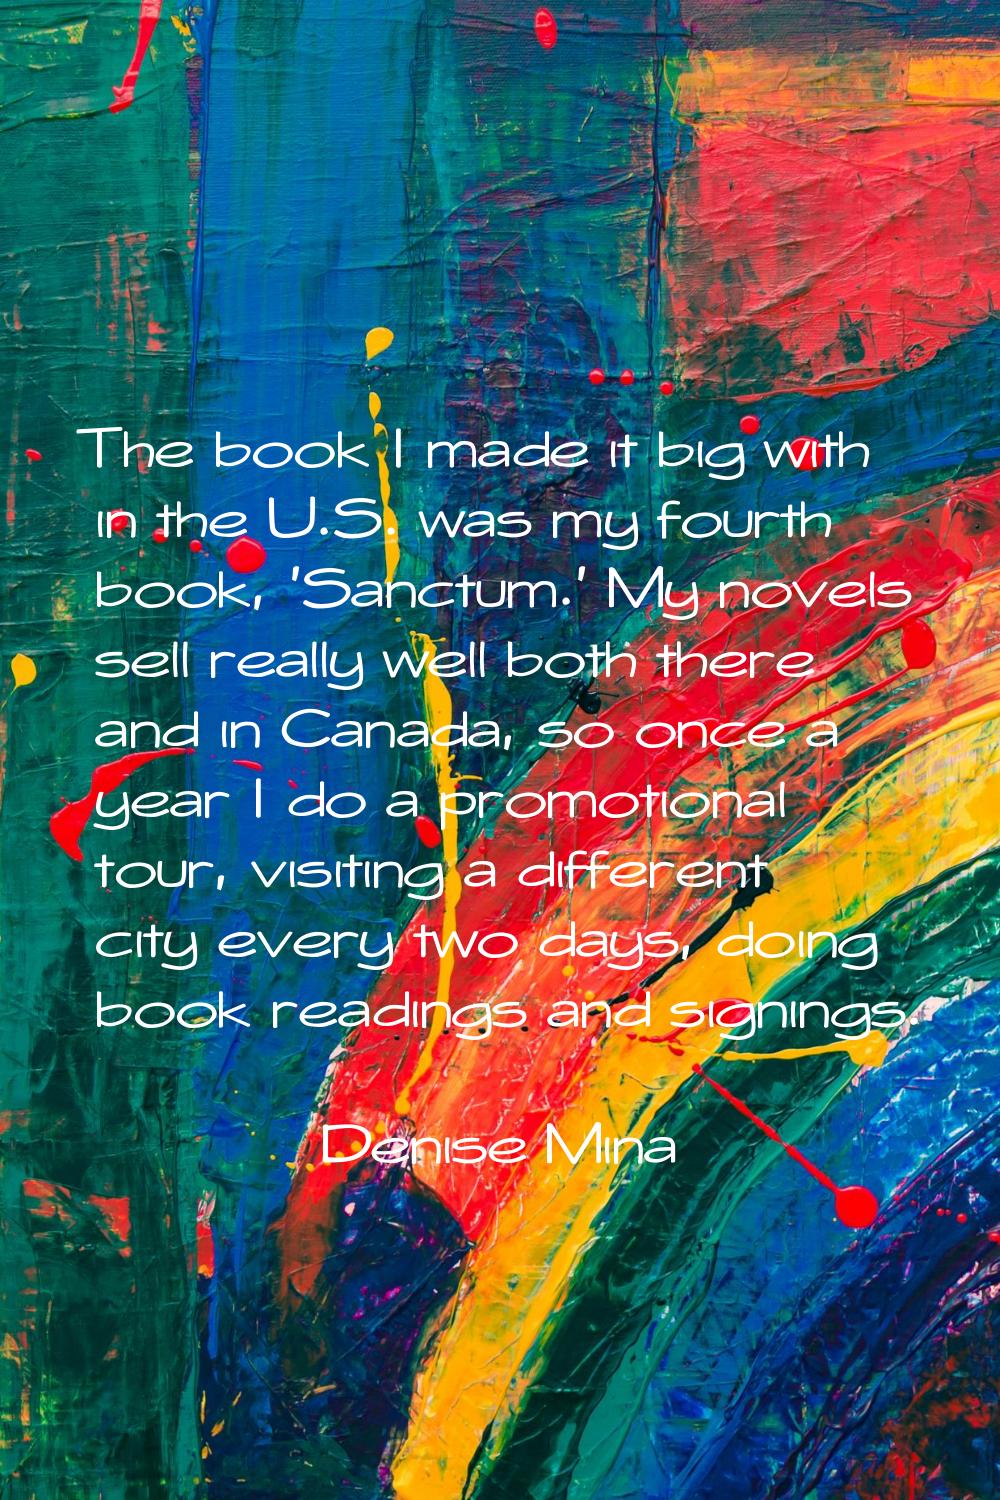 The book I made it big with in the U.S. was my fourth book, 'Sanctum.' My novels sell really well b